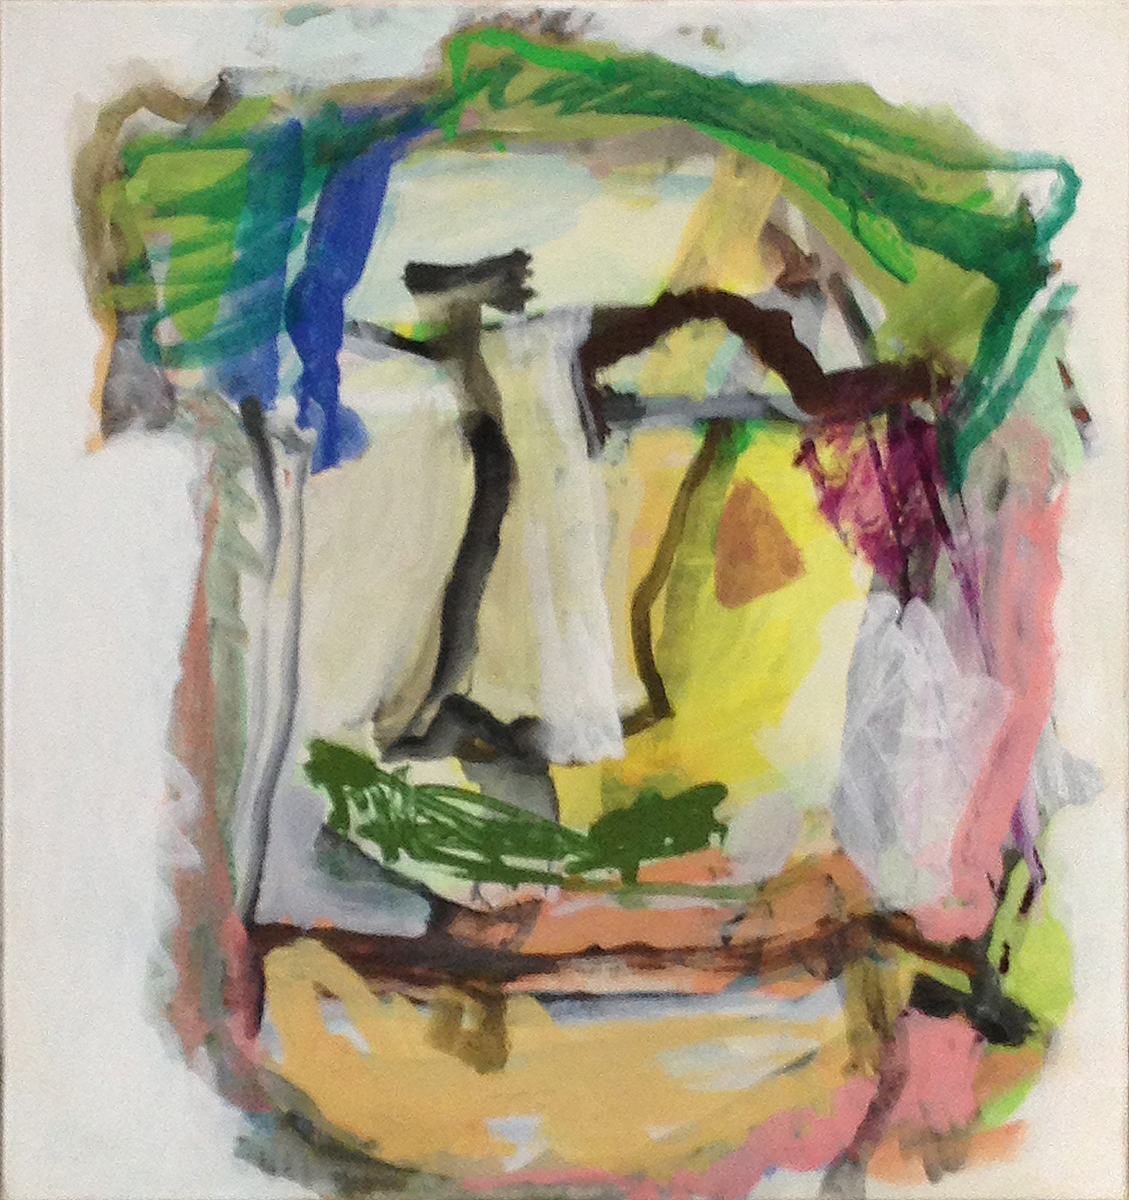 Mann mit gruenem Bart, 201475 x 65 cmAcrylic on canvas